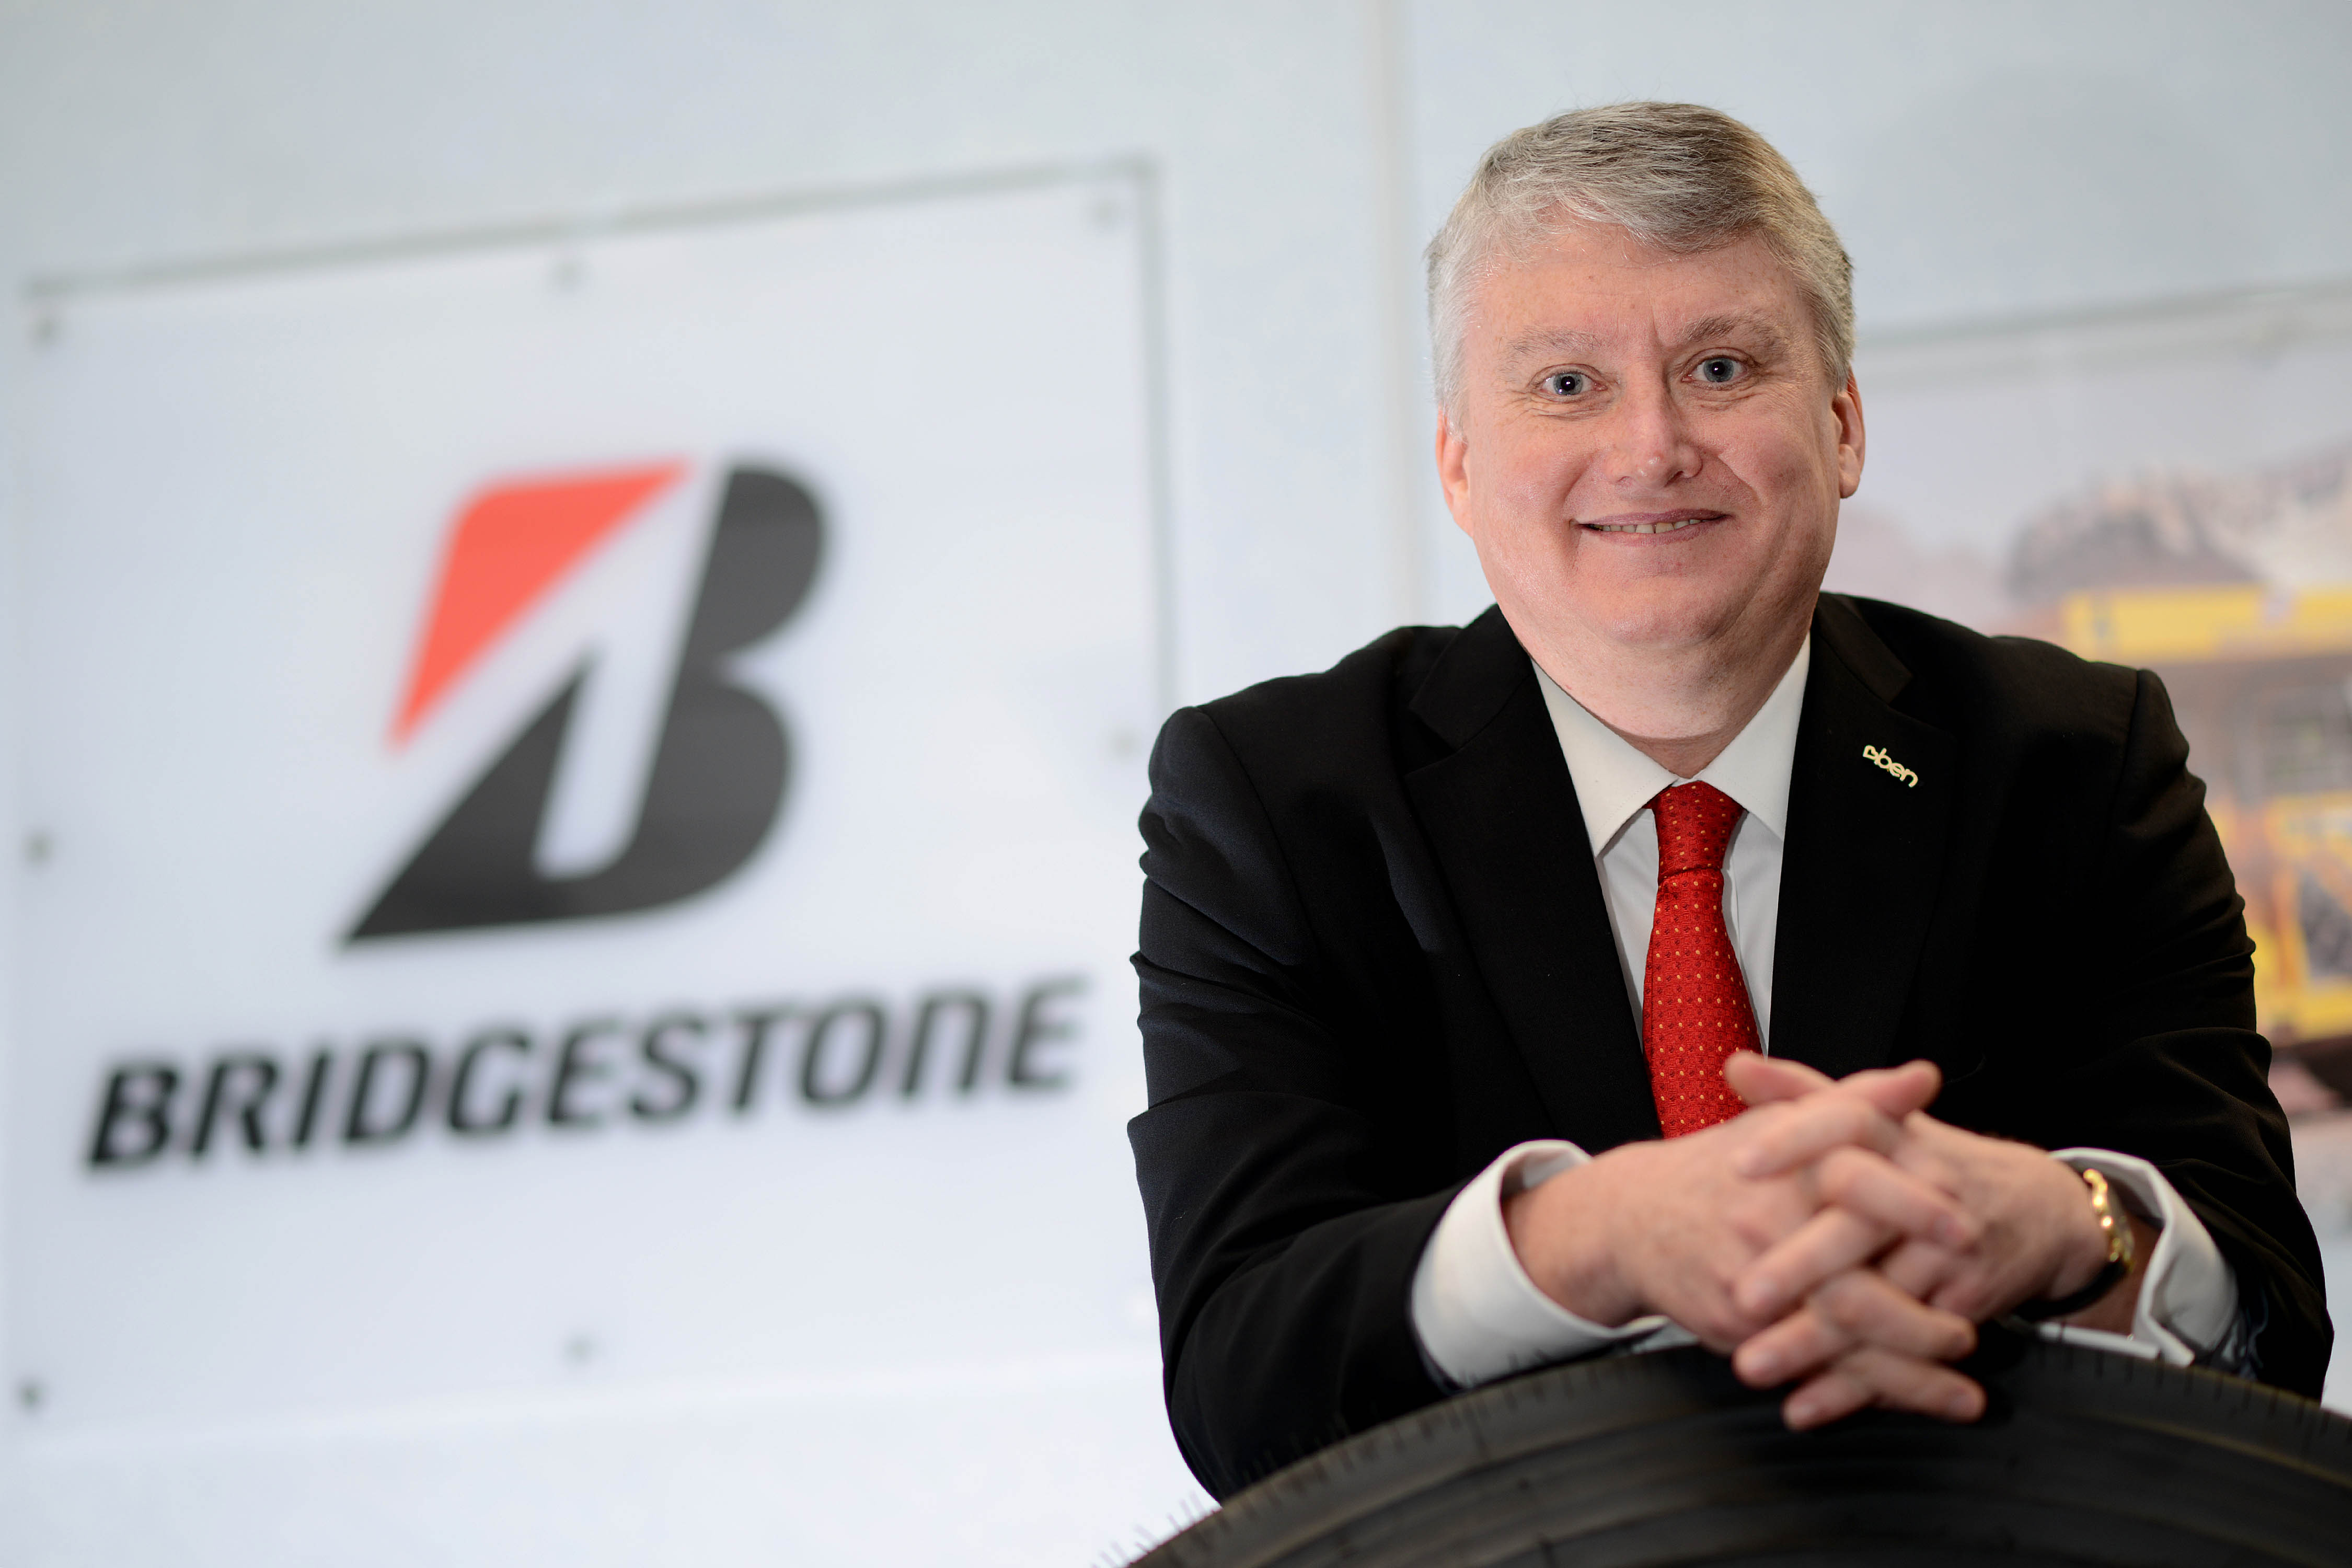 Bridgestone calls for UK to follow Ireland’s lead in illegal tyre fines